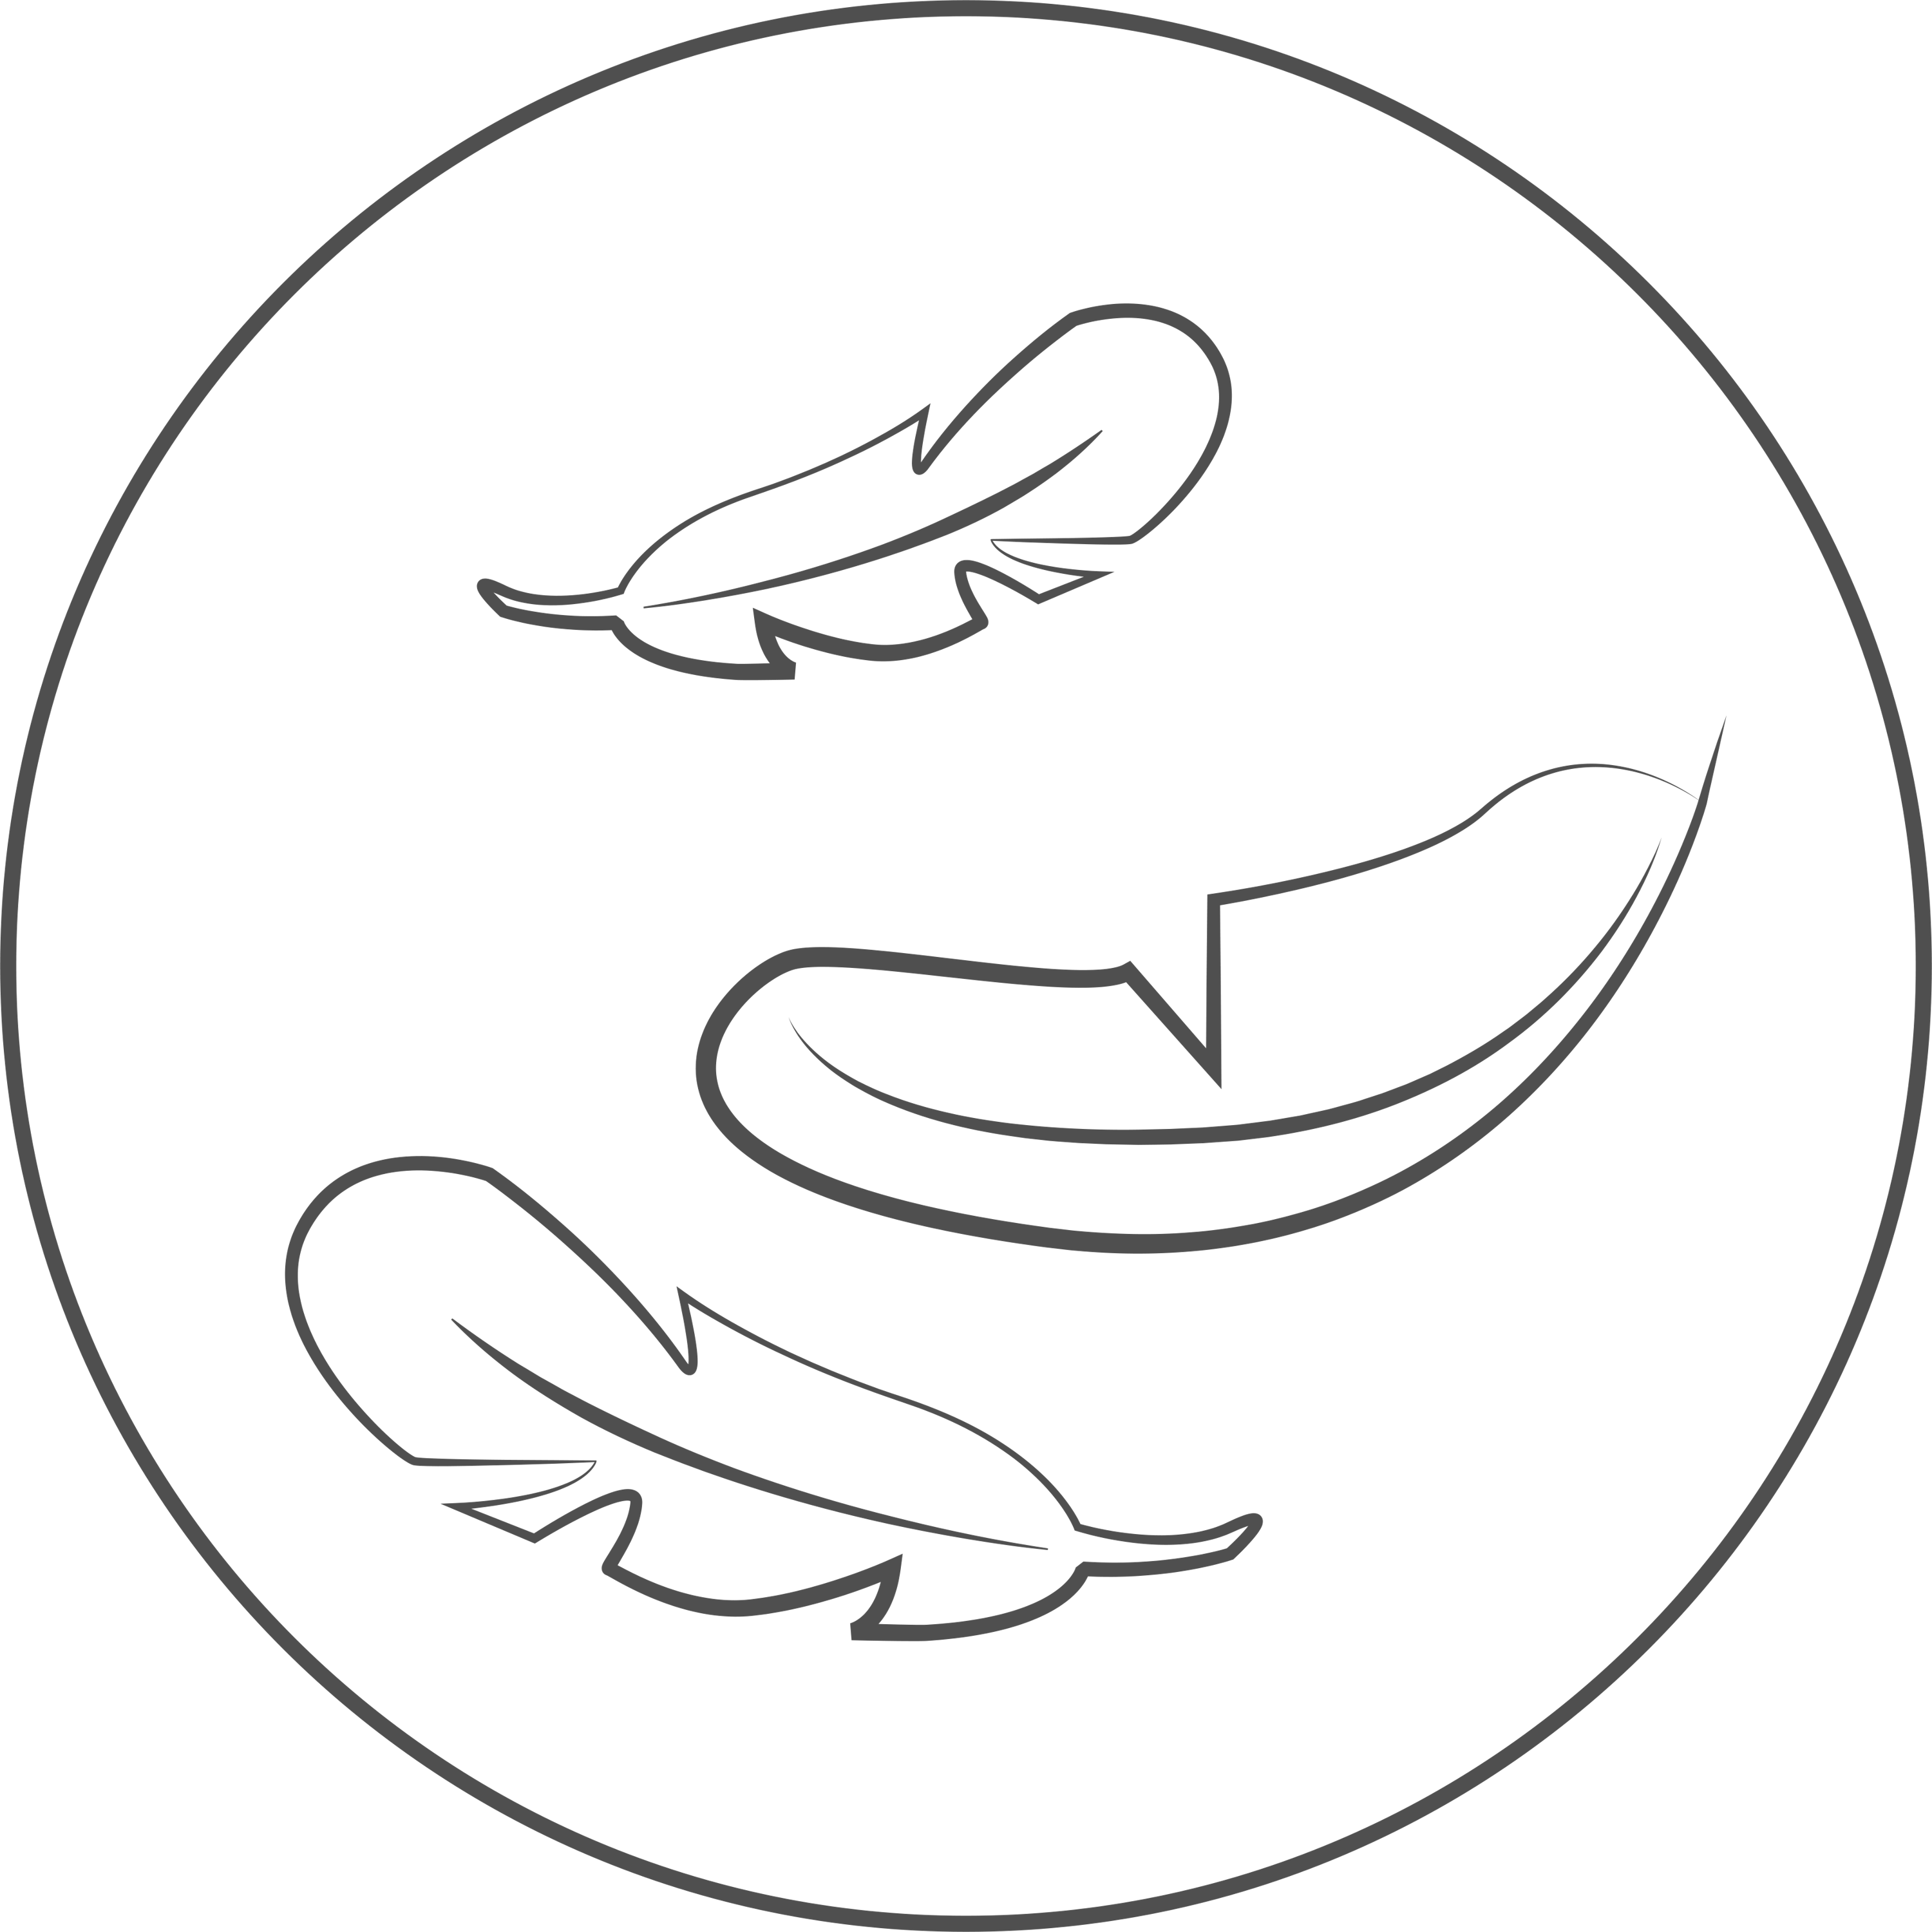 illustration of 3 feathers floating